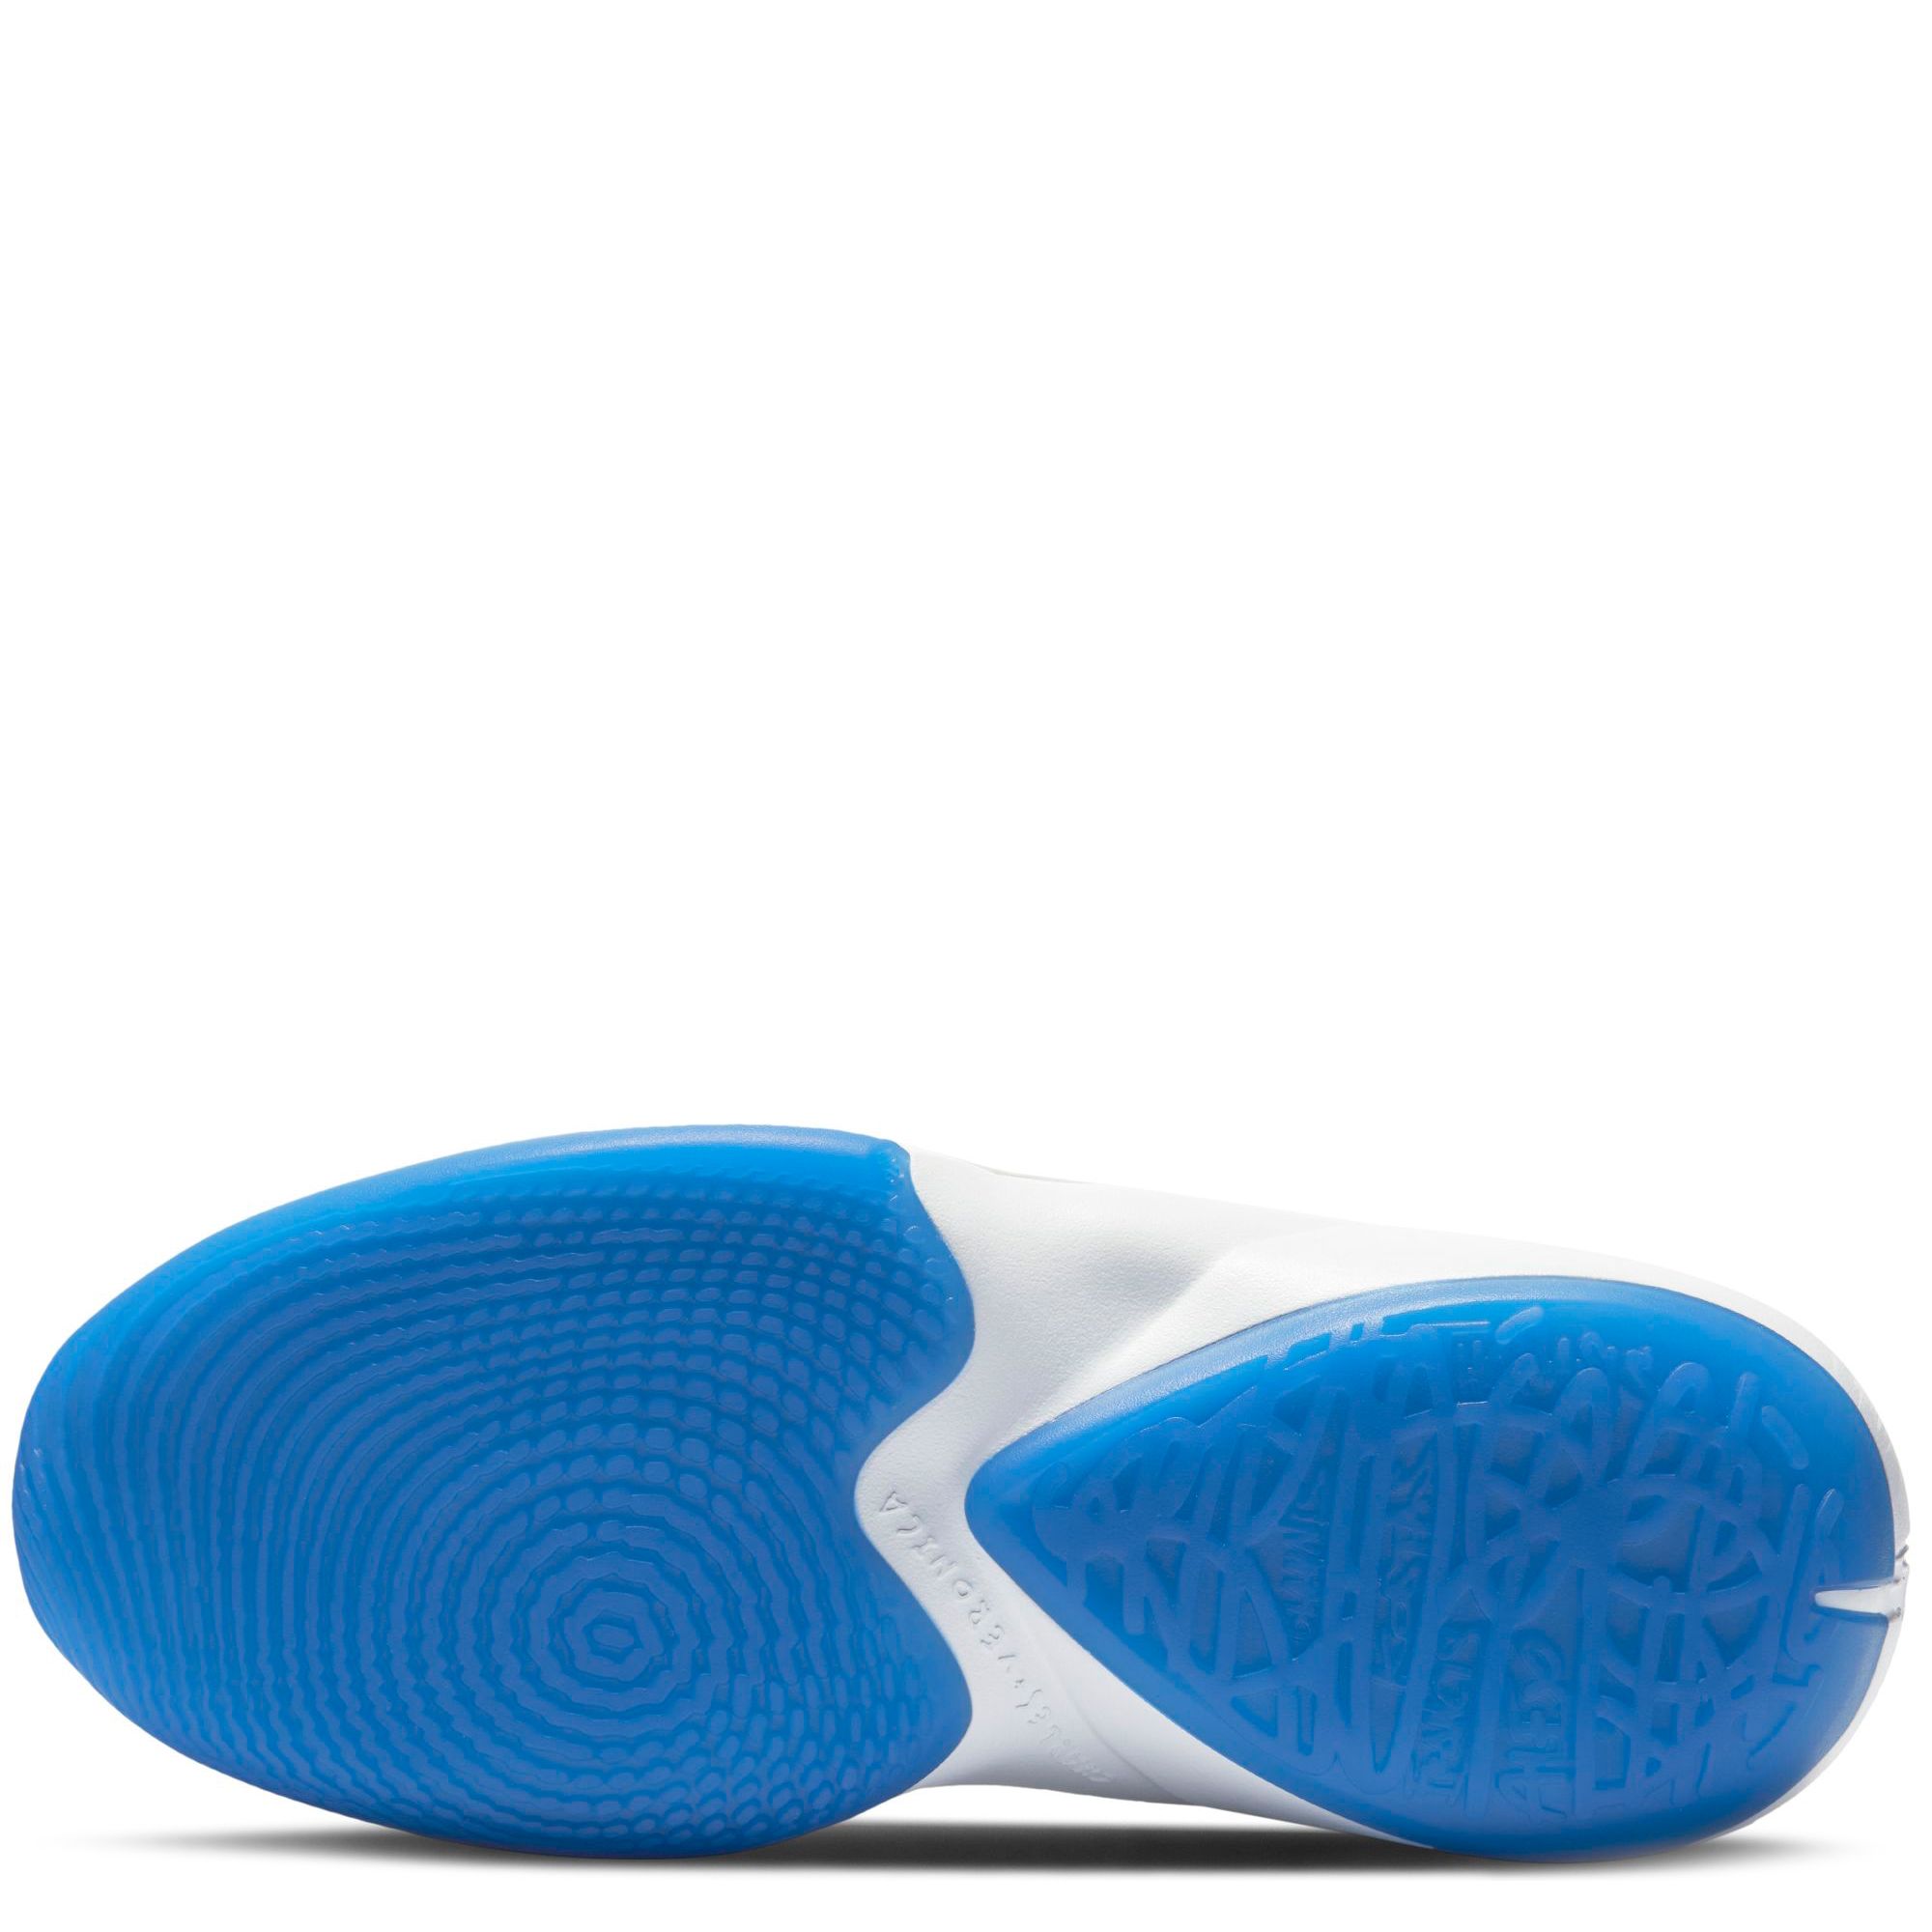 Nike Kids Giannis Freak 2 SE Basketball Shoe - Signal Blue/Summit  White/Light Smoke Grey